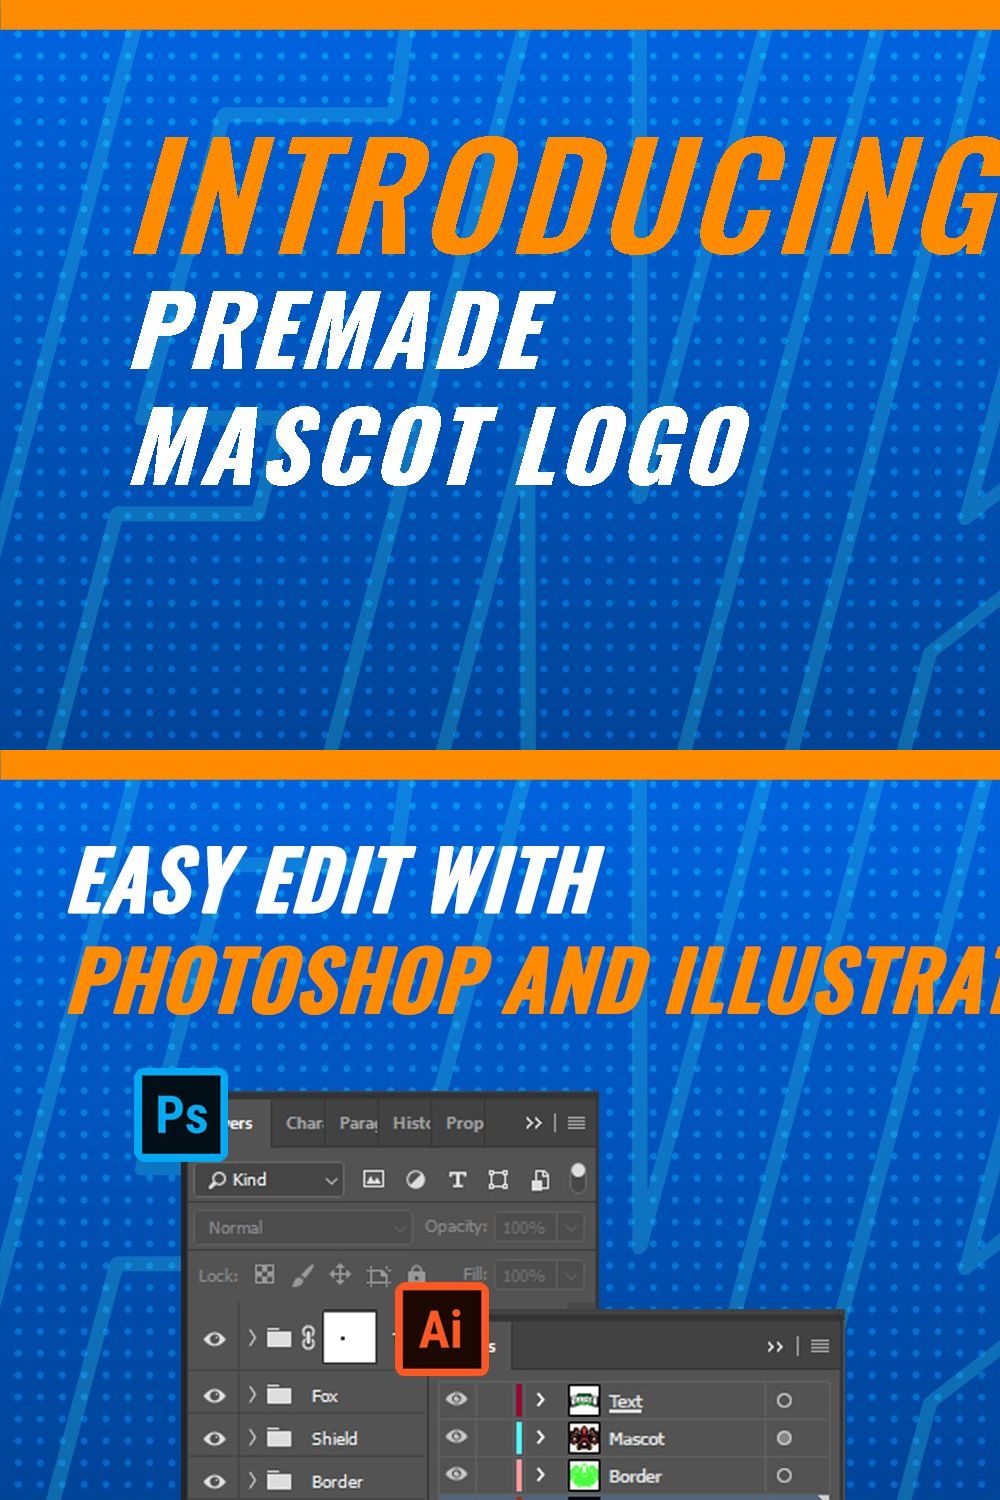 Blue Dragons - Mascot & Esport Logo pinterest preview image.